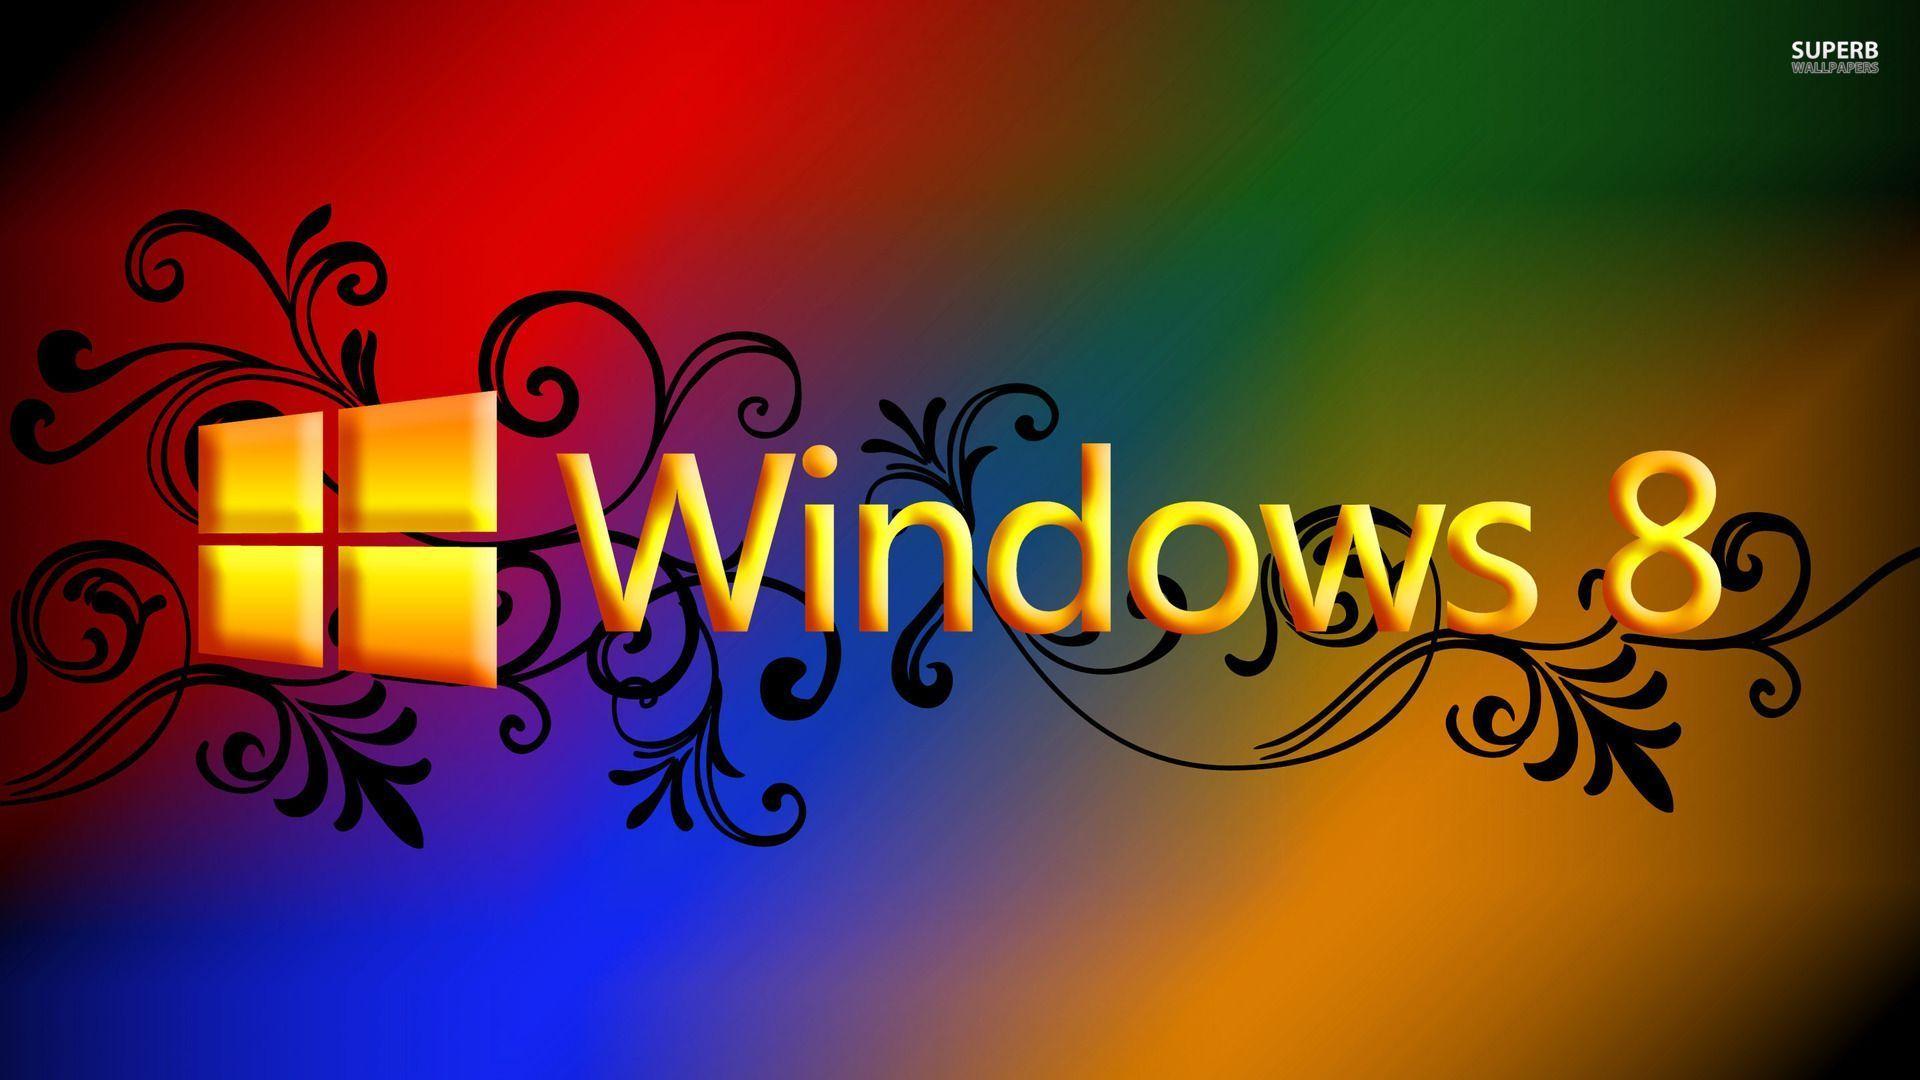 Windows 8 wallpaper wallpaper - #